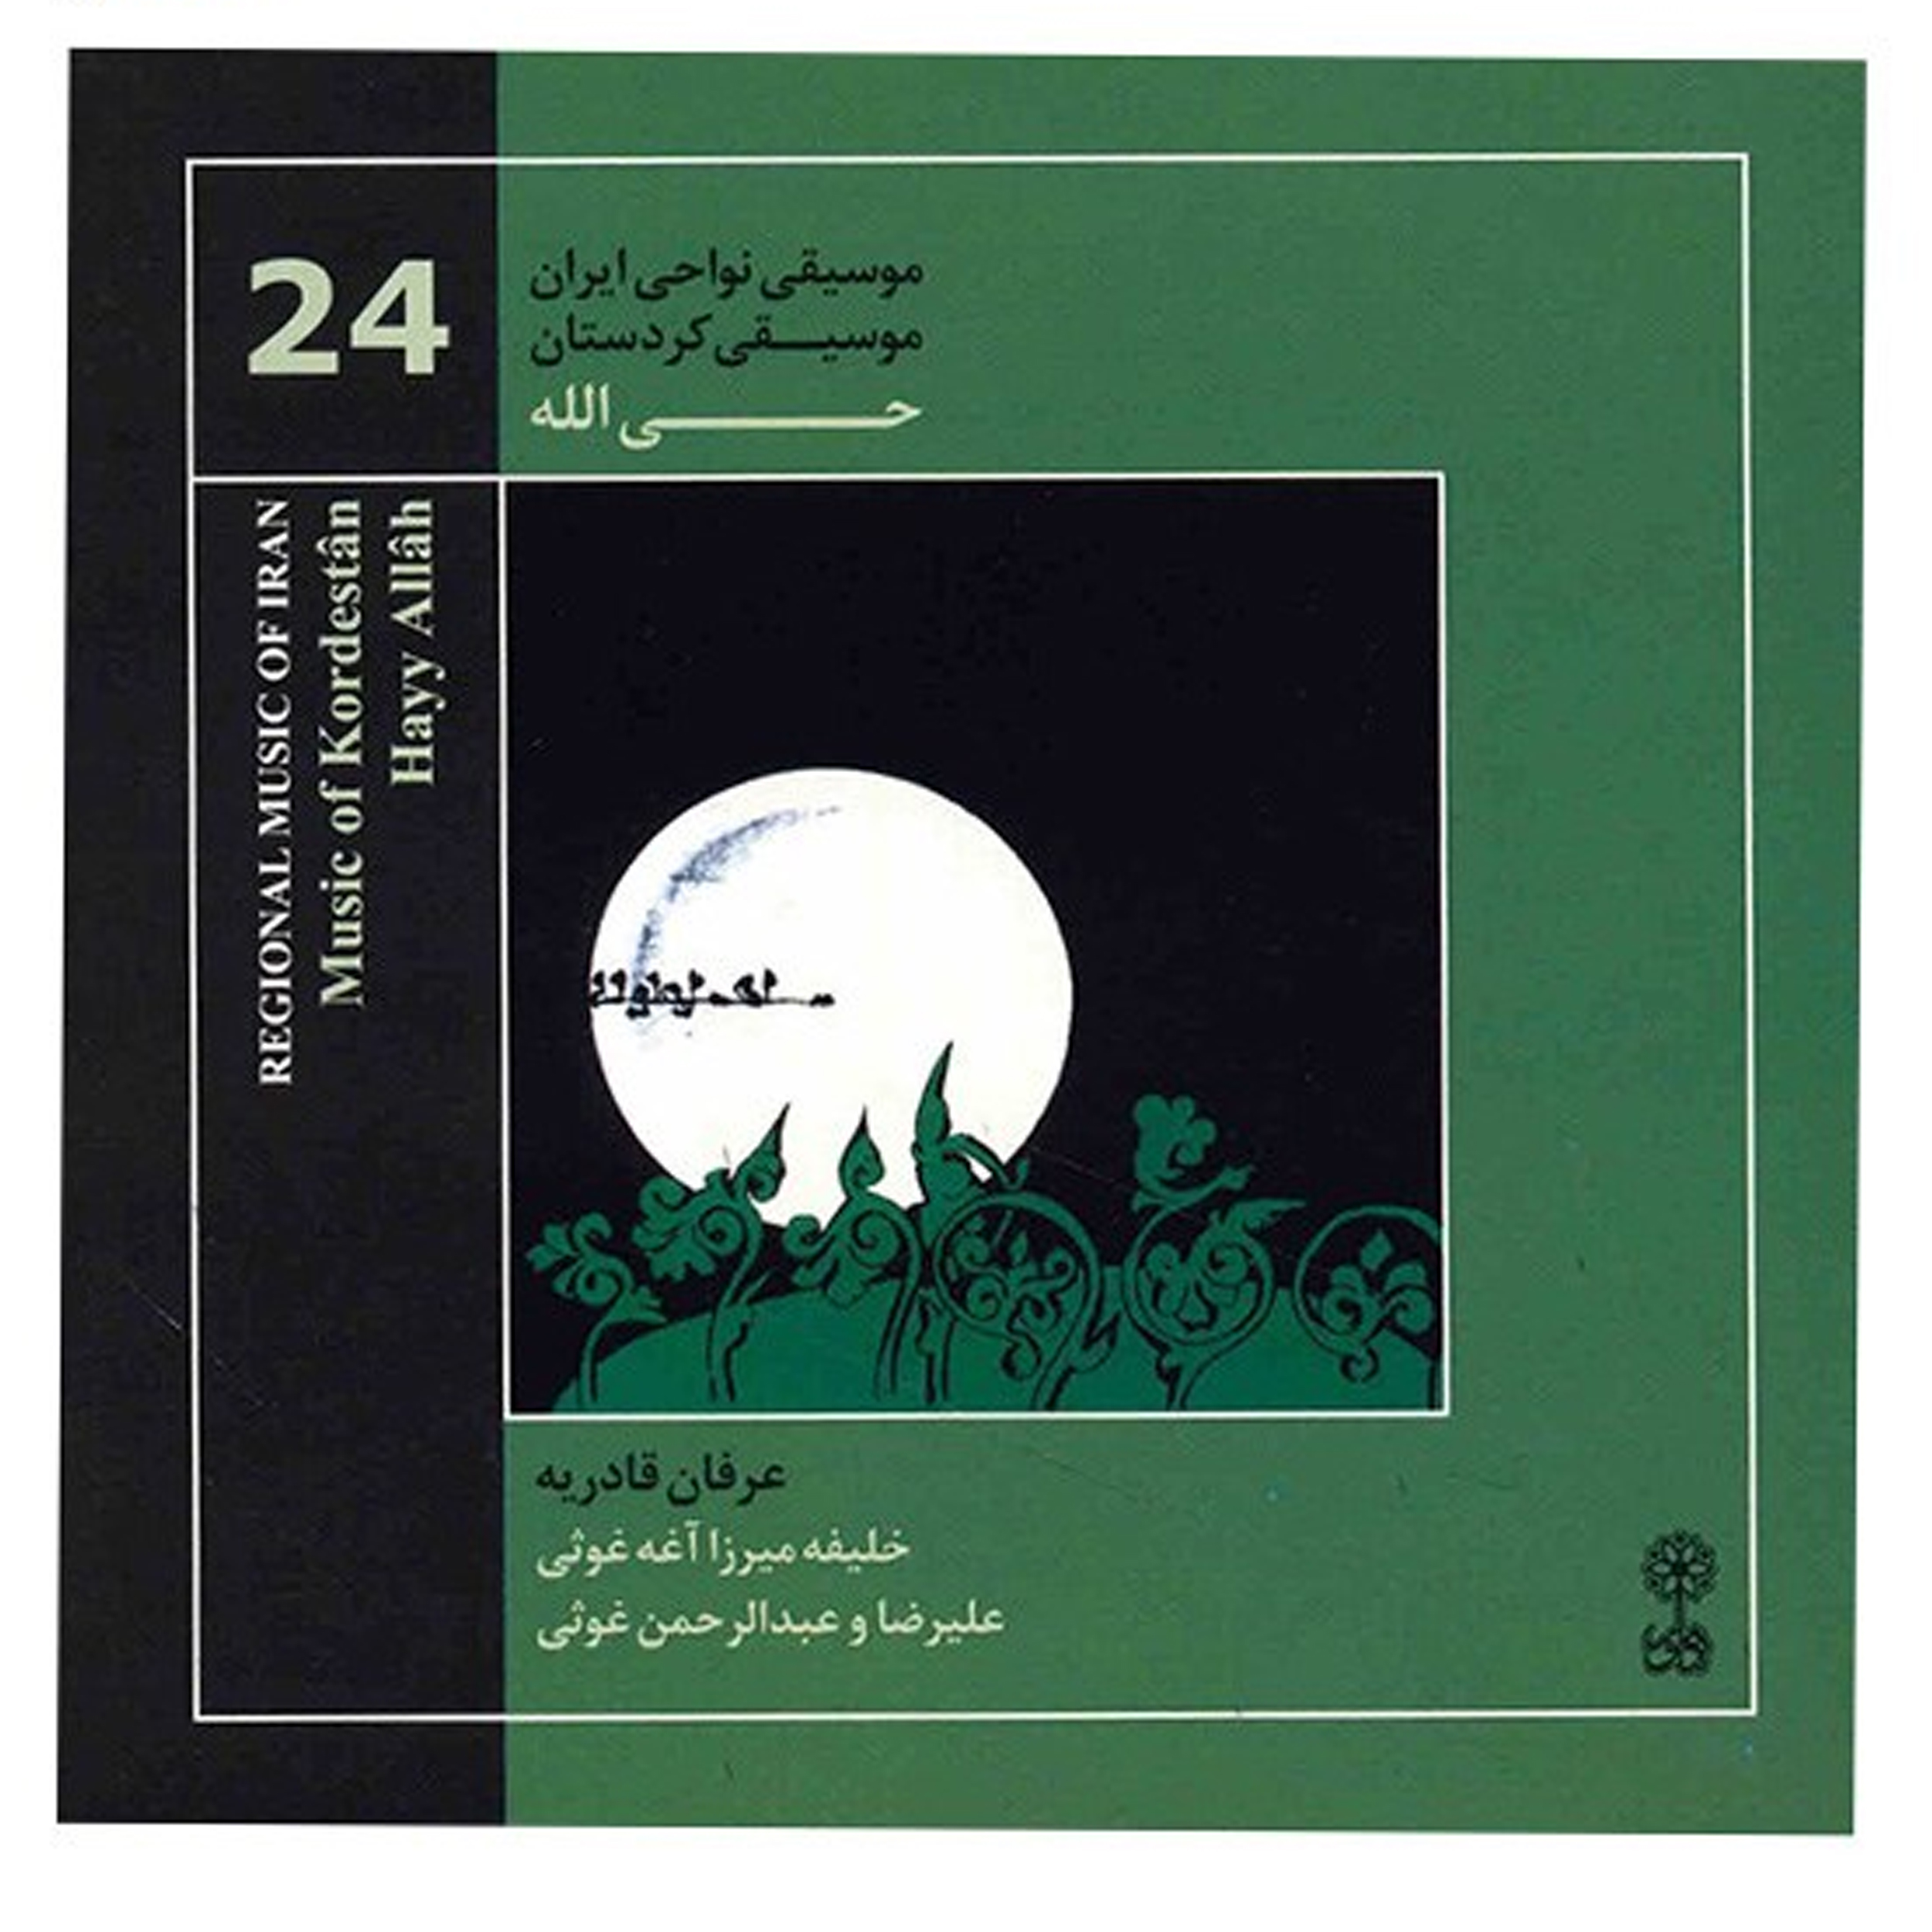 آلبوم موسیقی حی الله - خلیفه میرزا آغه غوثی